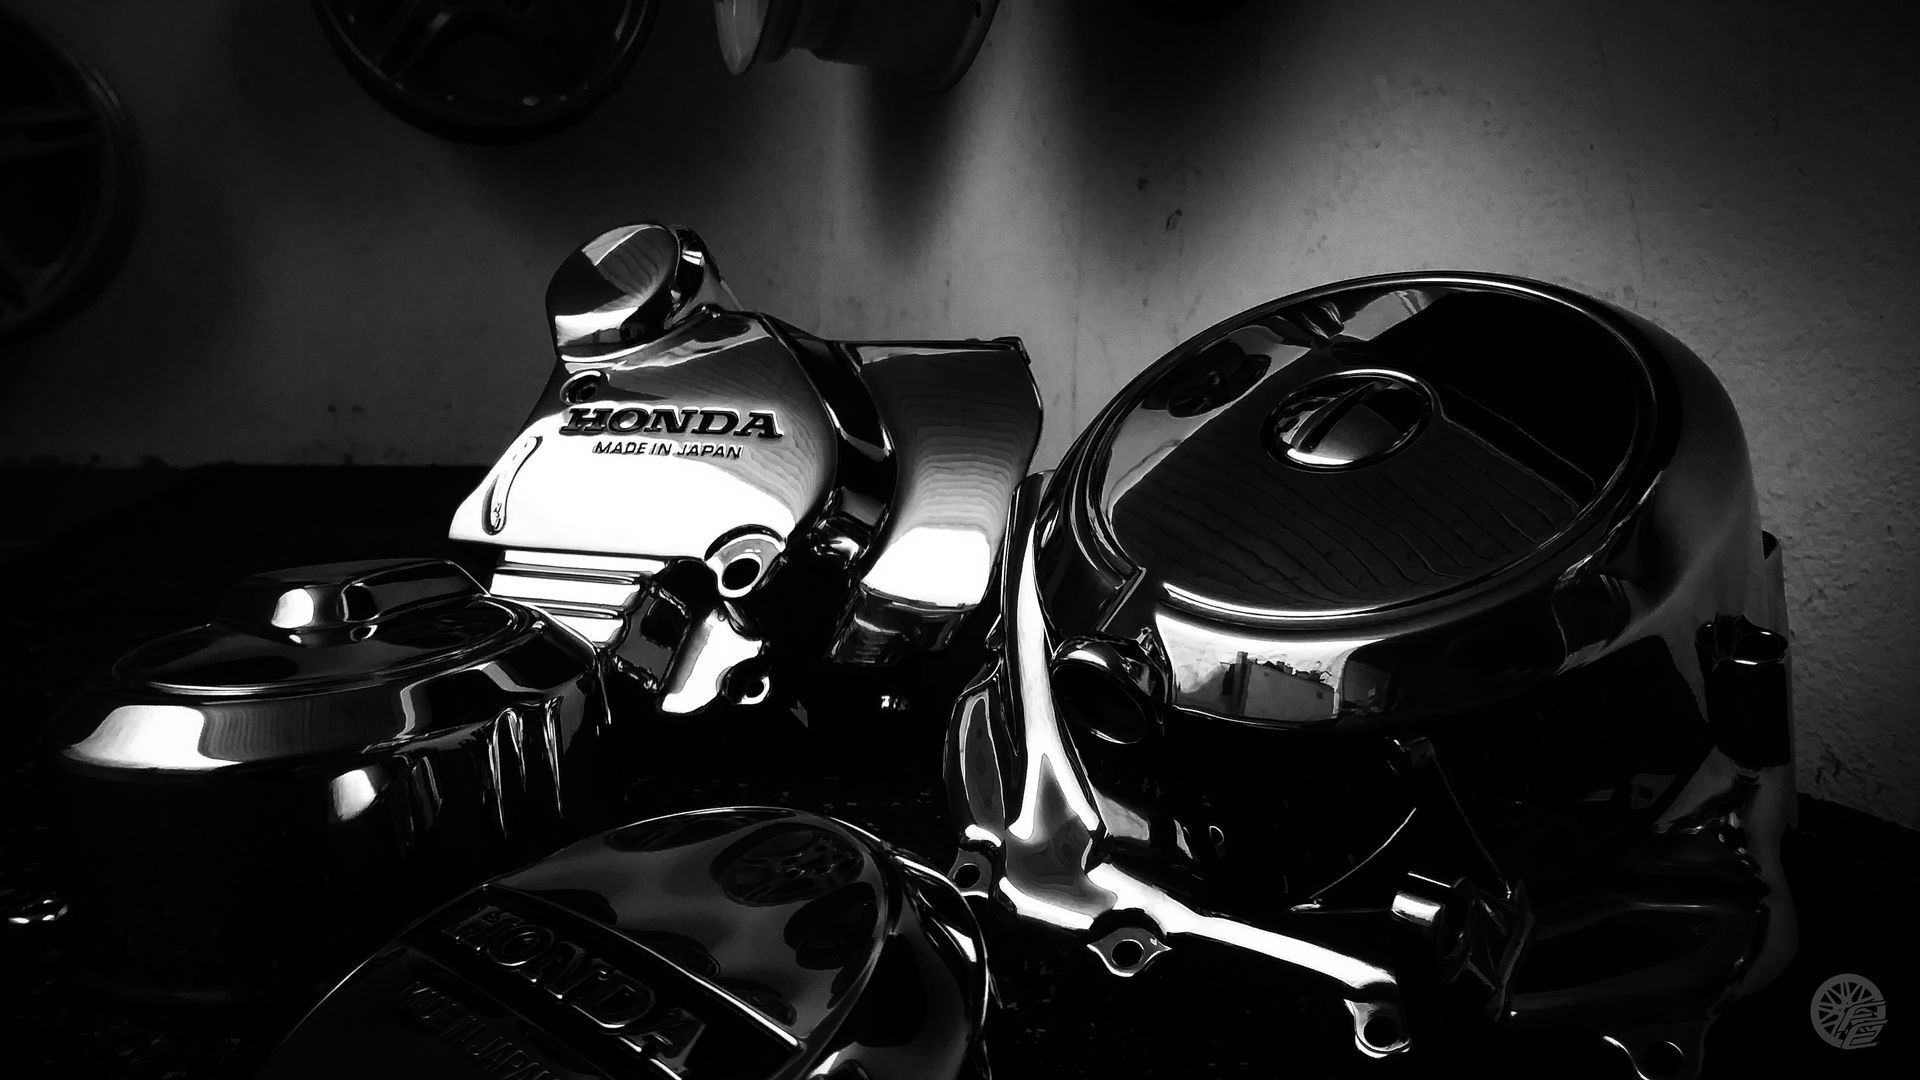 Honda Motorradbauteile auf Hochglanz poliert